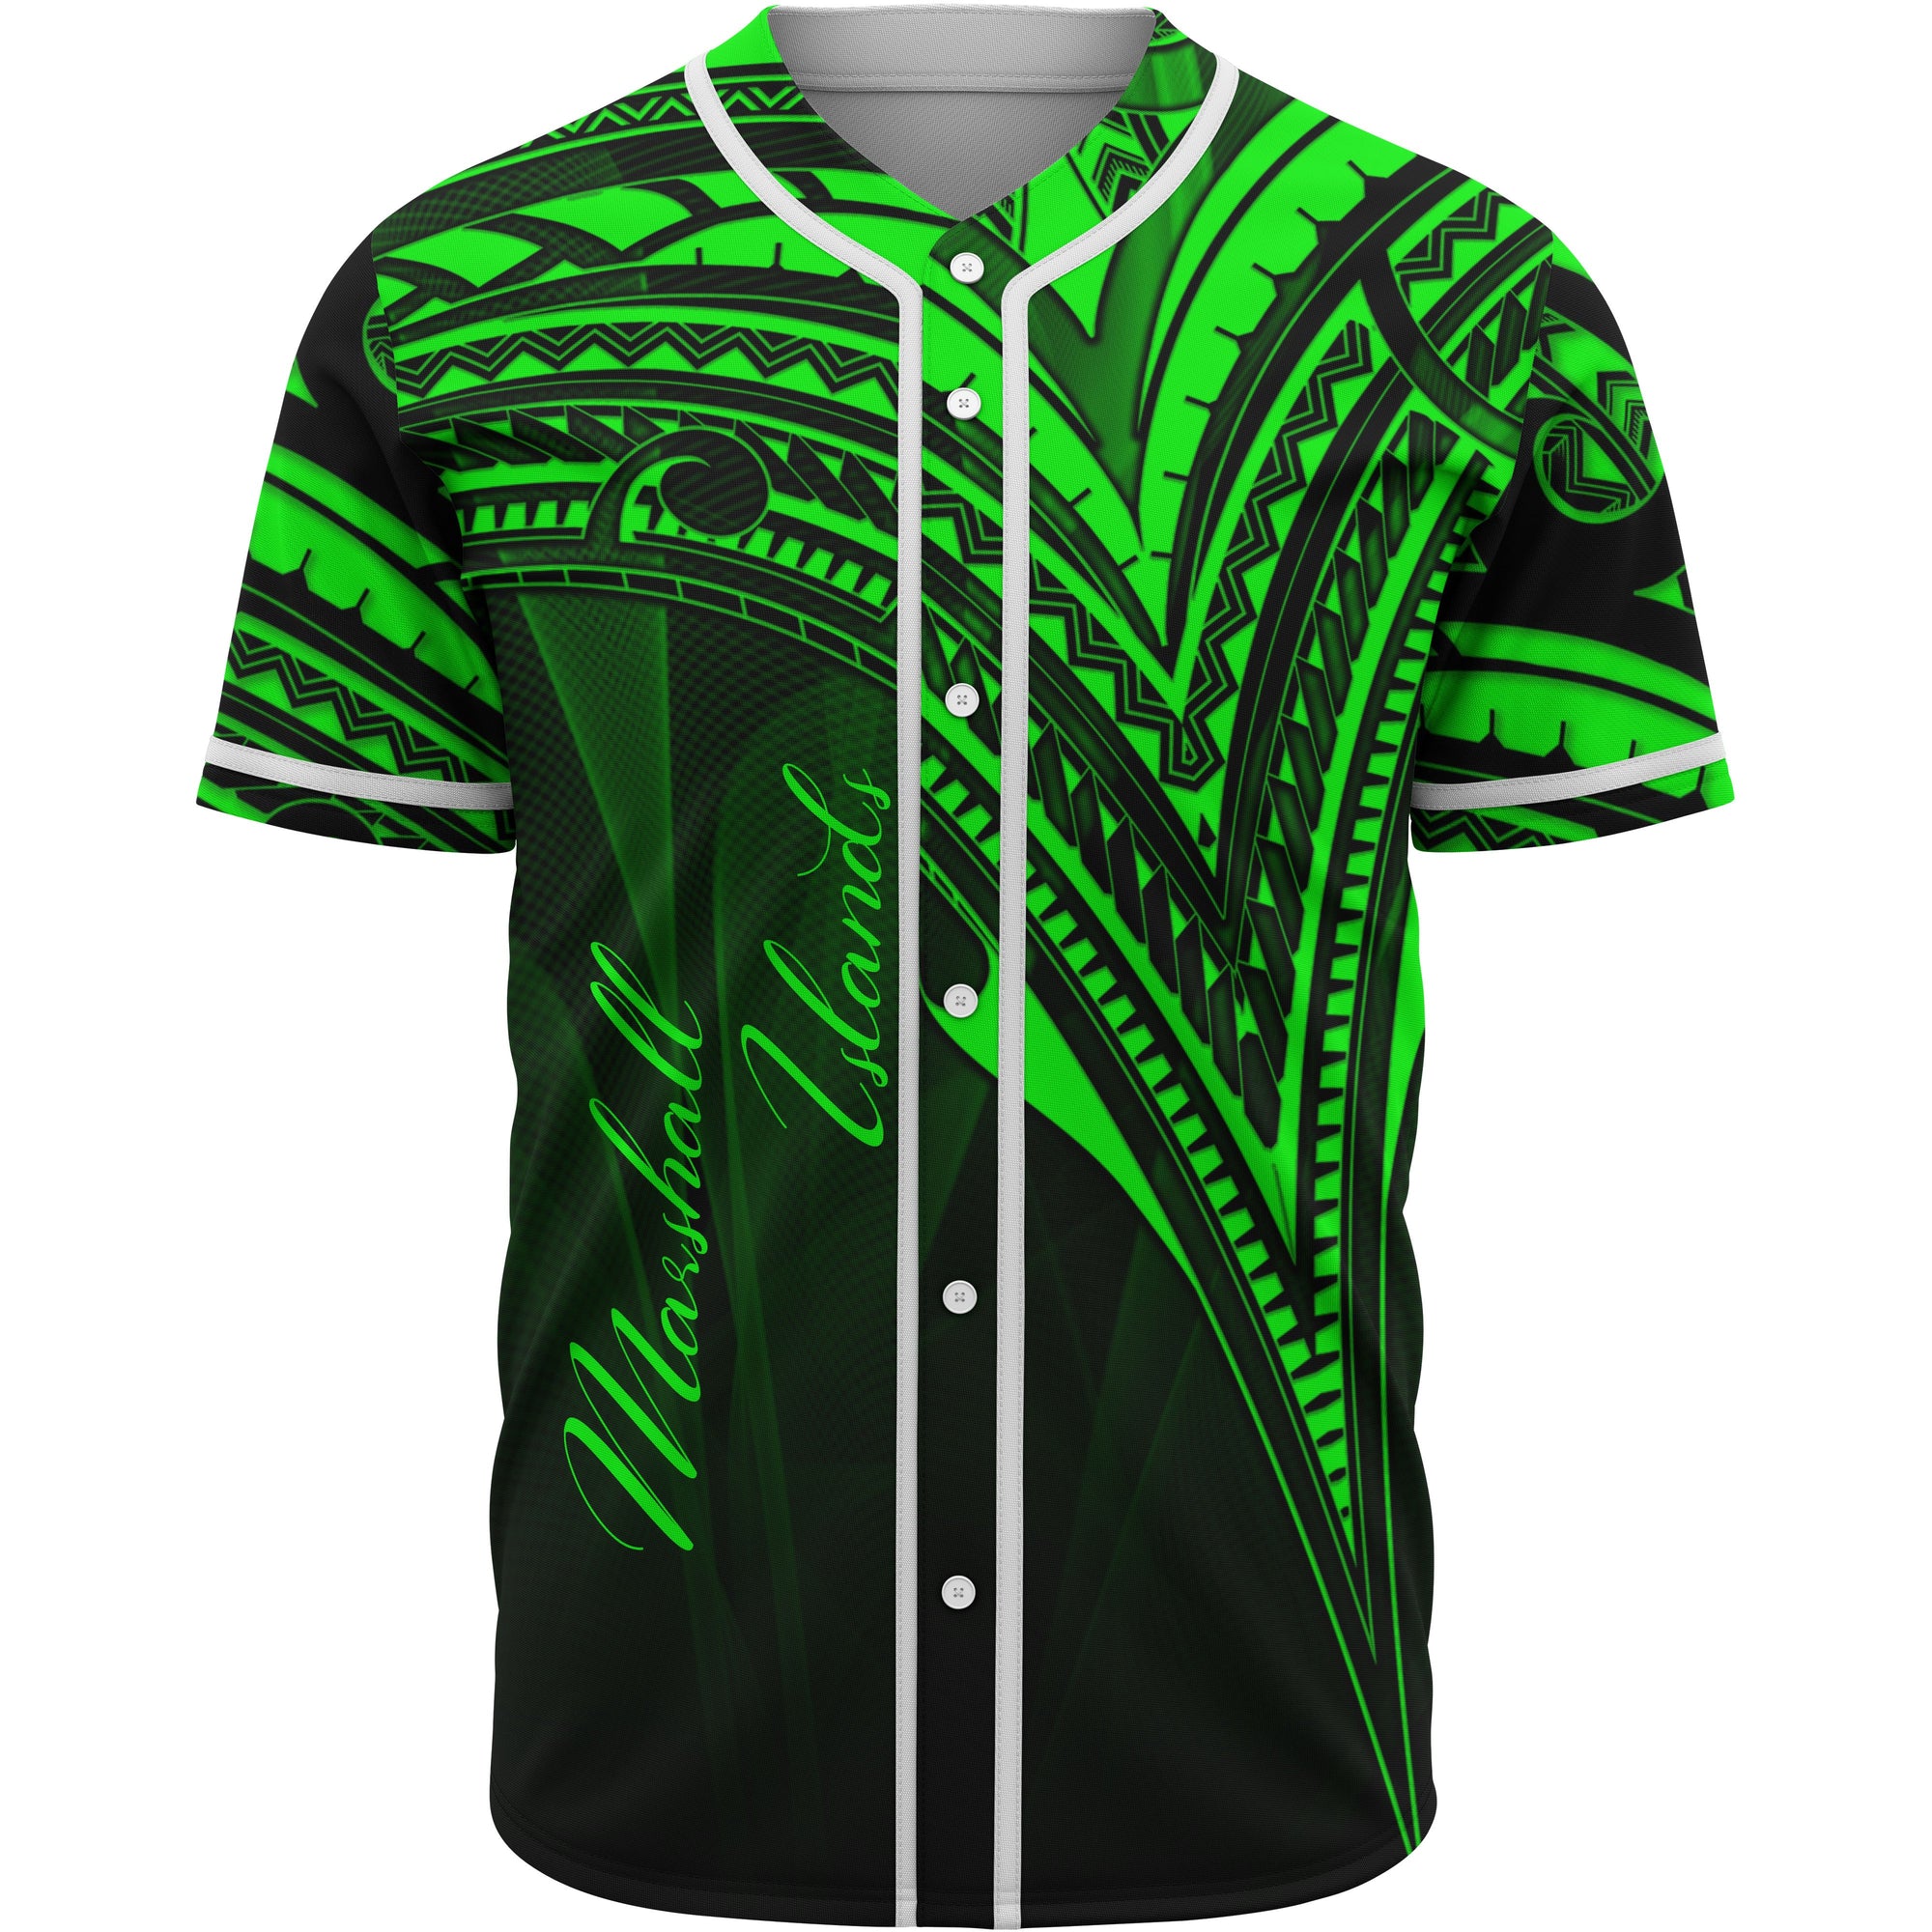 Marshall Islands Baseball Shirt - Green Color Cross Style Unisex Black - Polynesian Pride